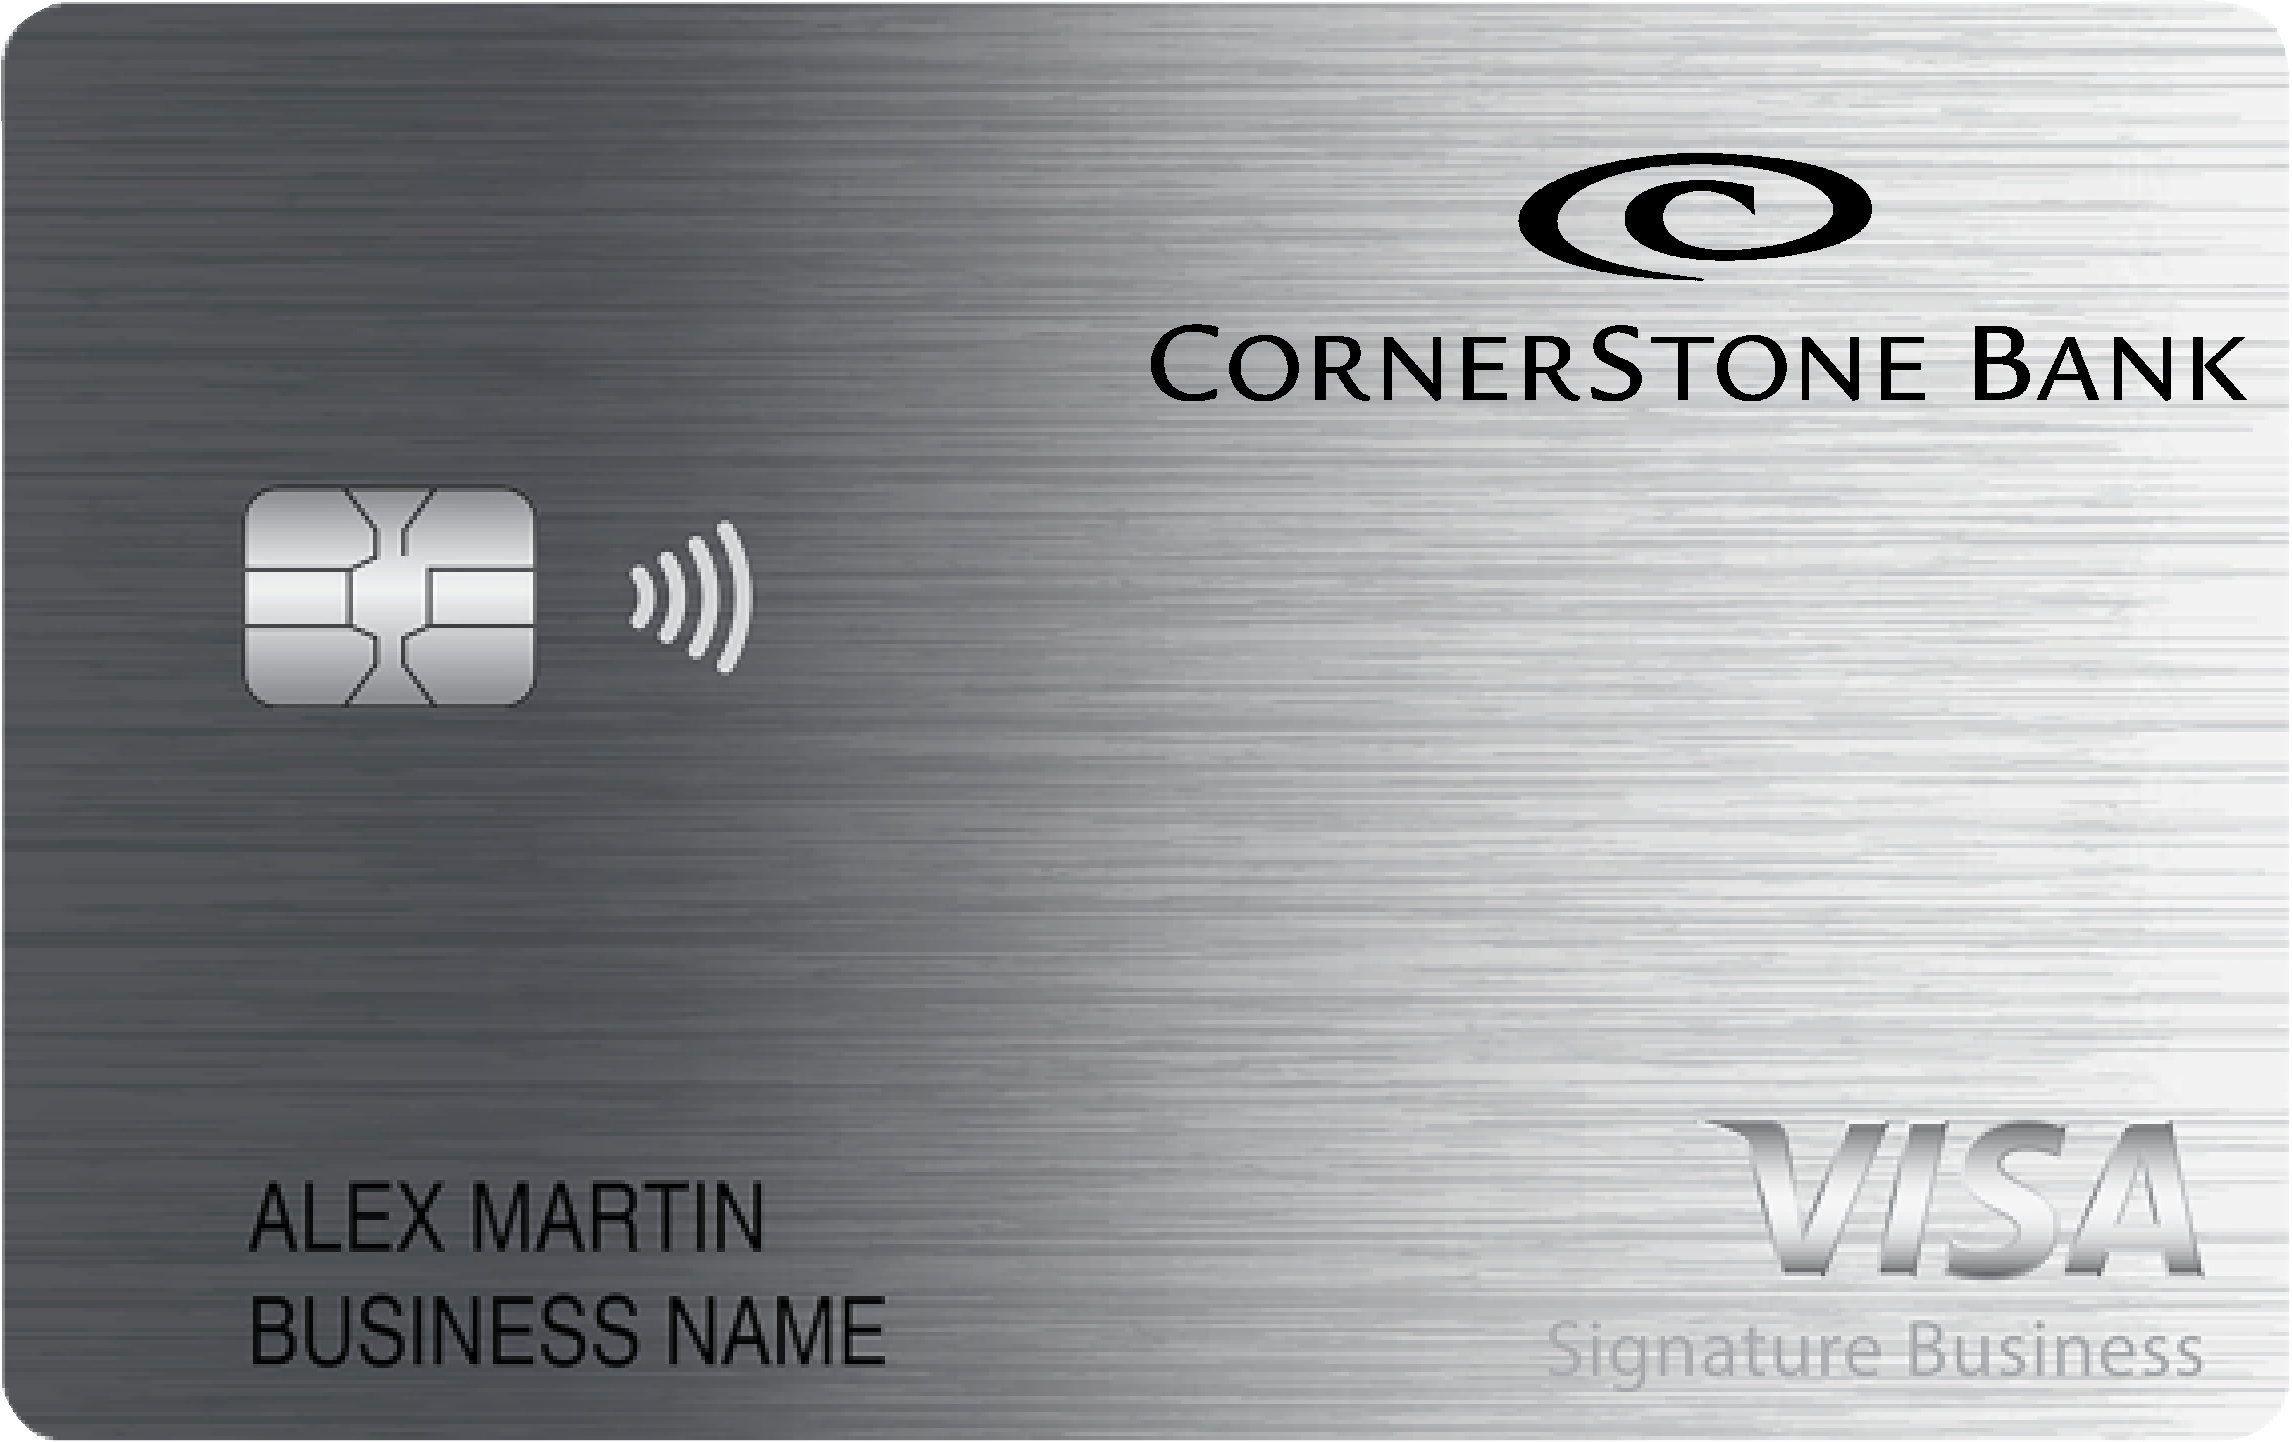 Cornerstone Bank Smart Business Rewards Card